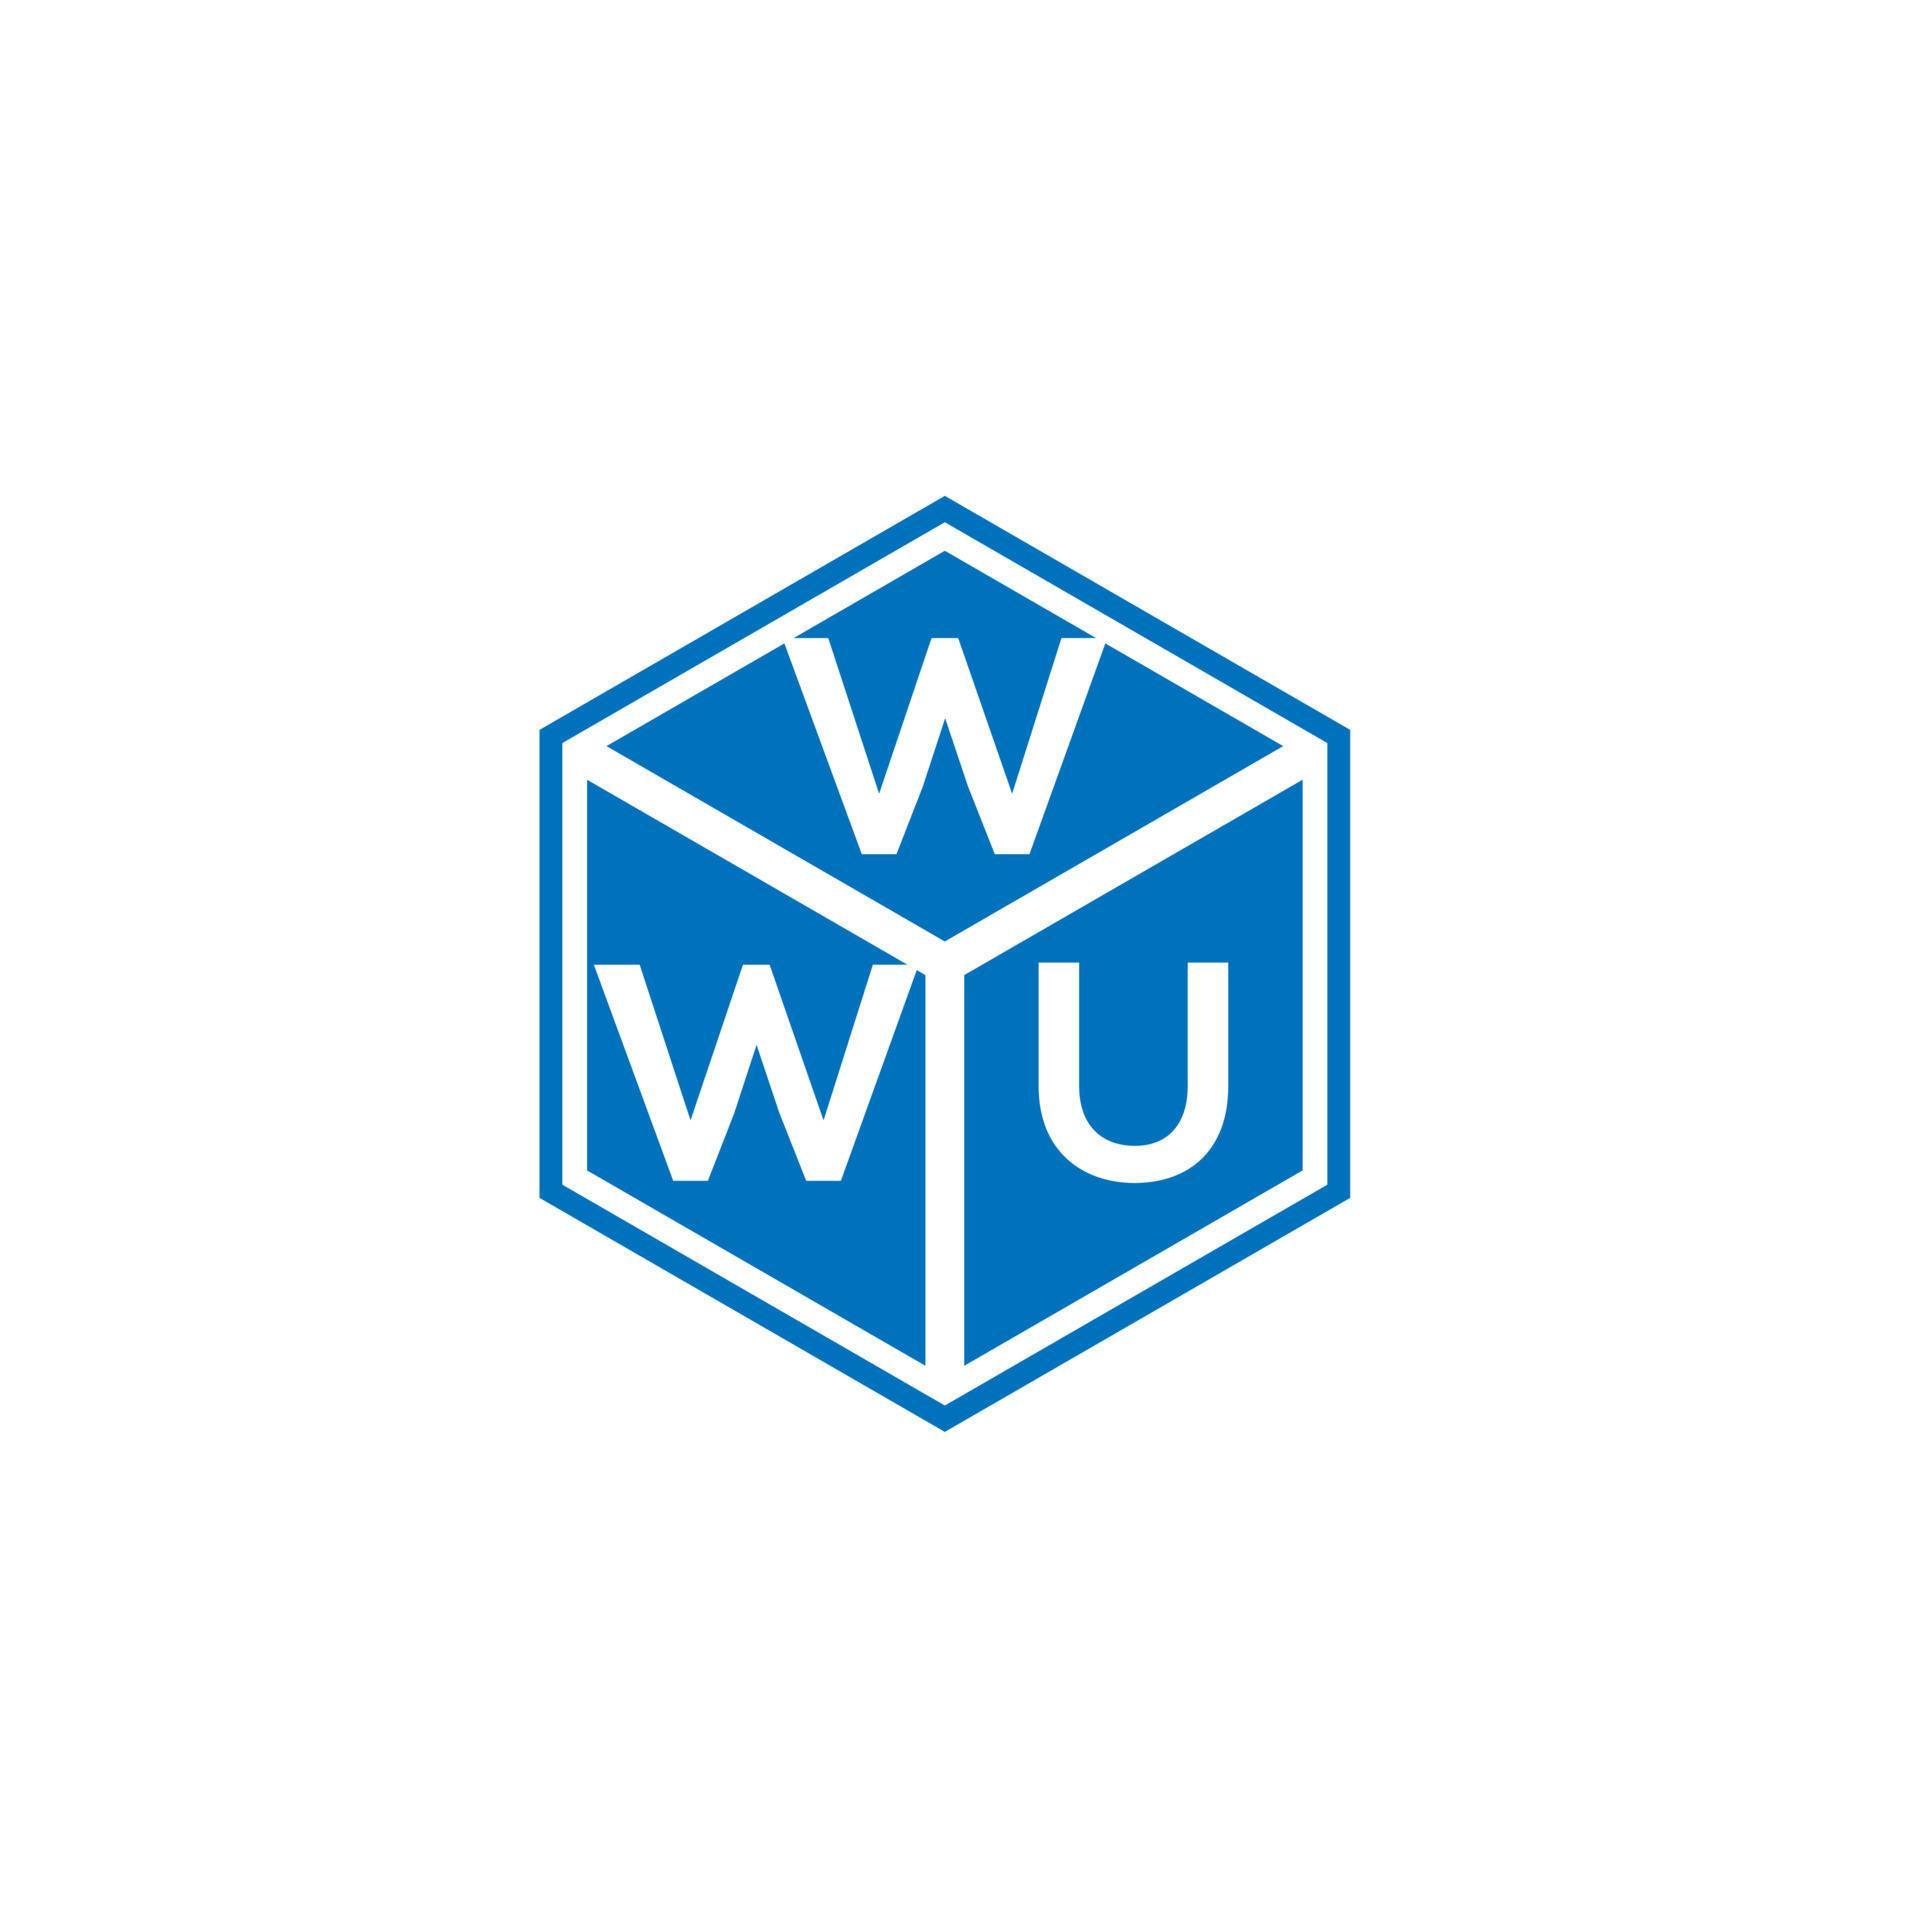 WWU letter logo design on black background. WWU creative initials